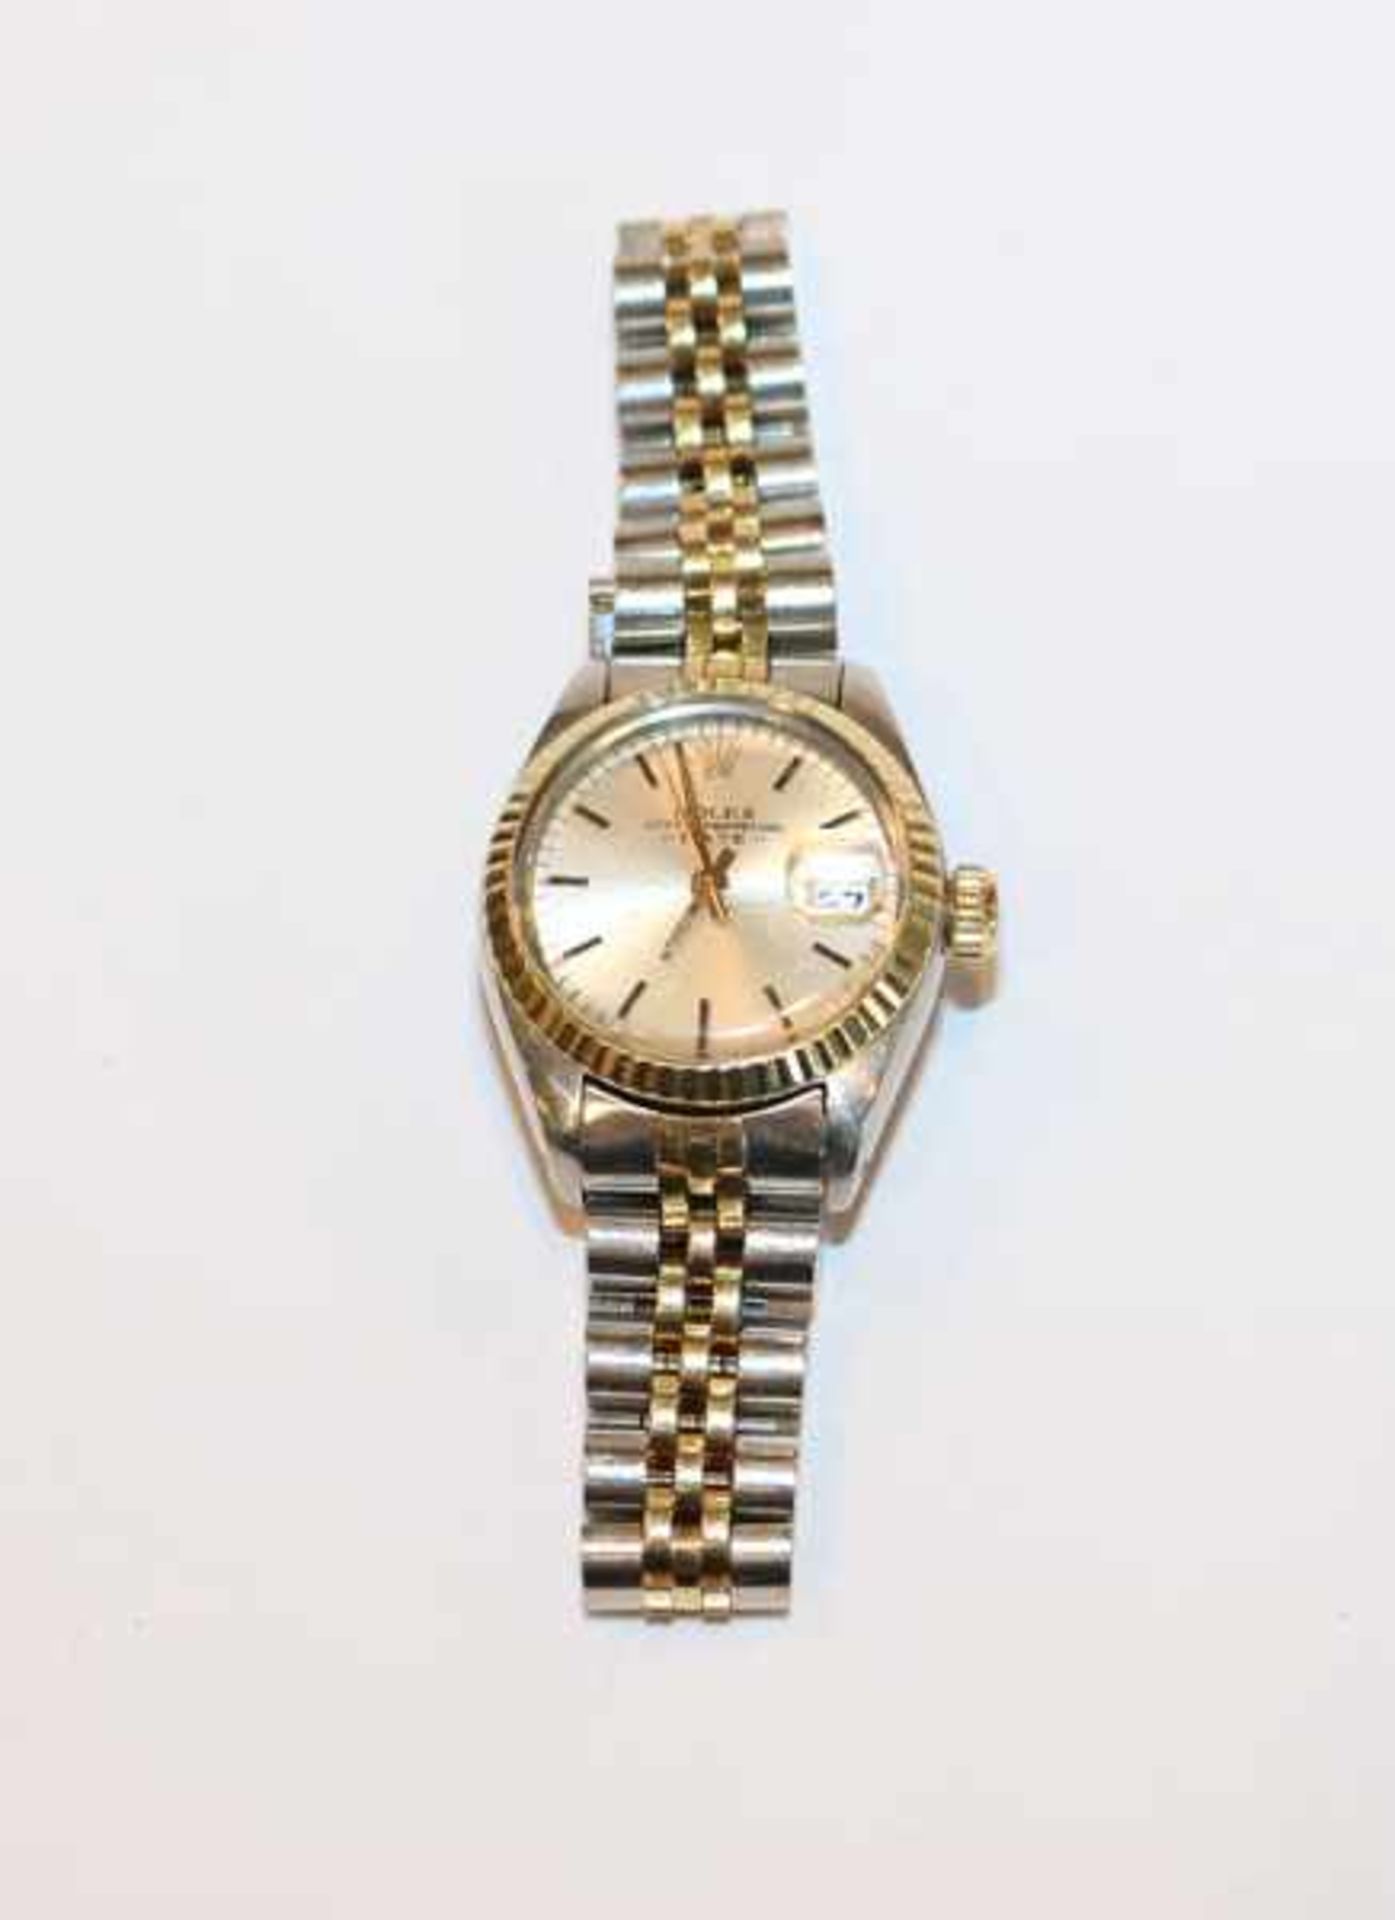 Rolex Damen-Armbanduhr, Stahlgold, Dayjust Oyster, benötigt Reinigung/Überholung ?, Tragespuren,